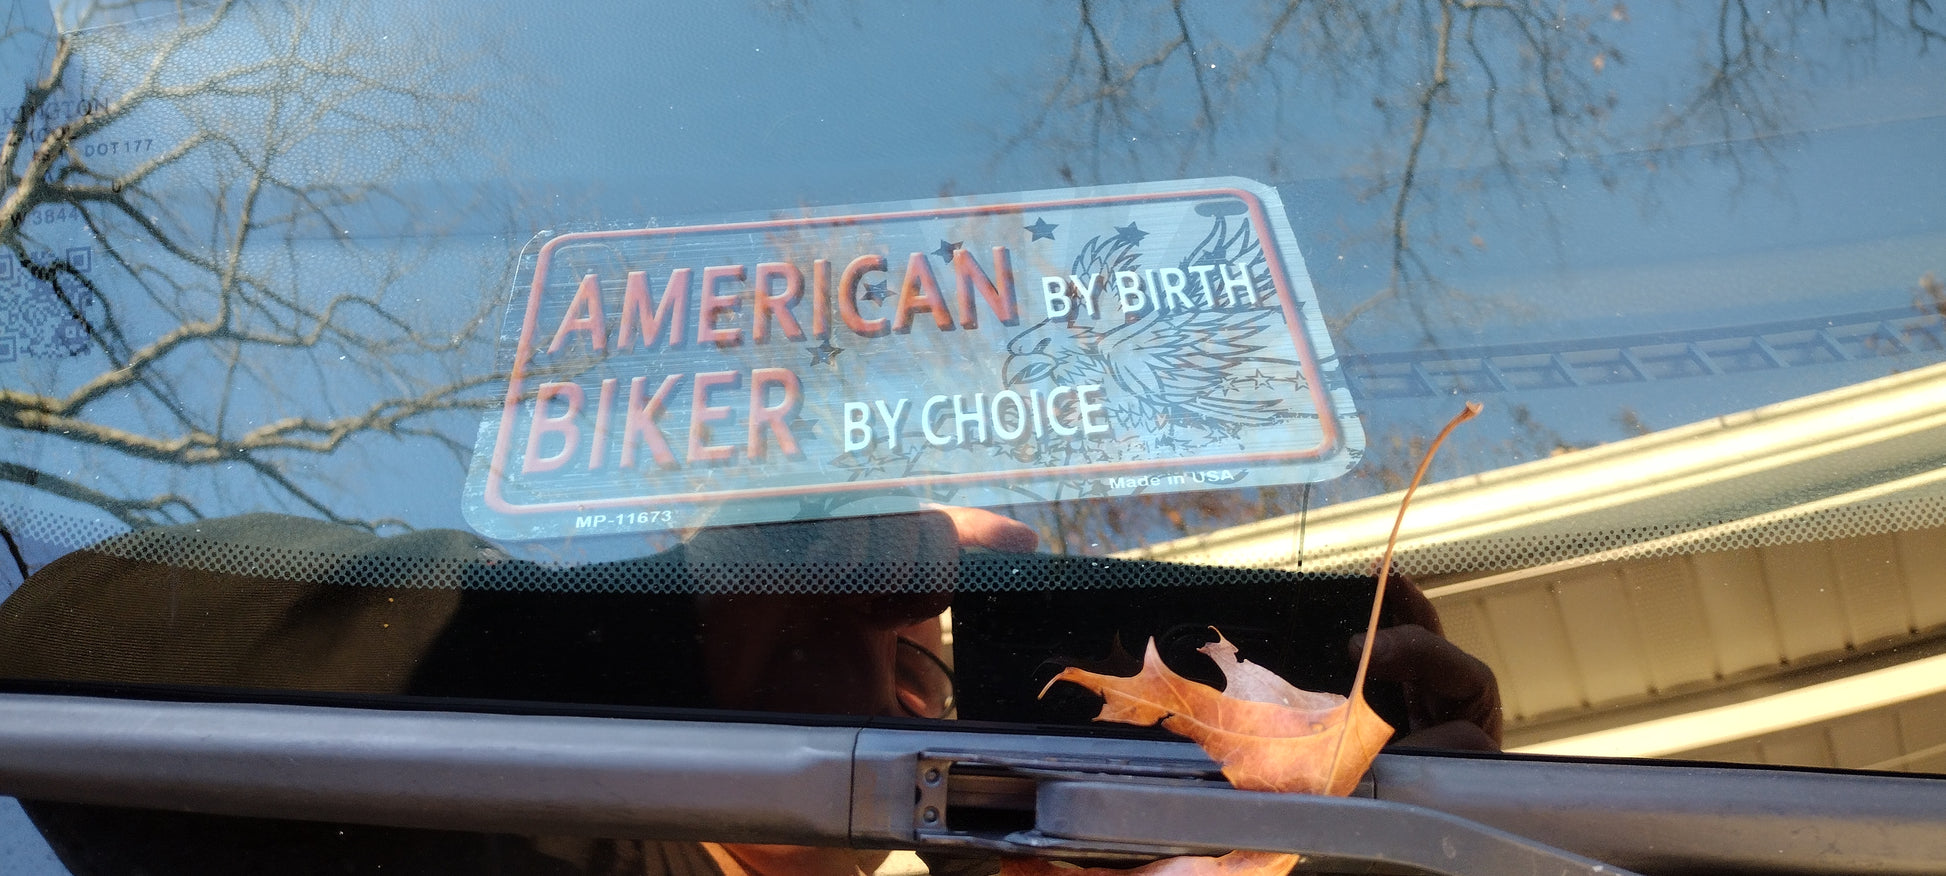 Windshield Display Of American Biker Novelty License Plate